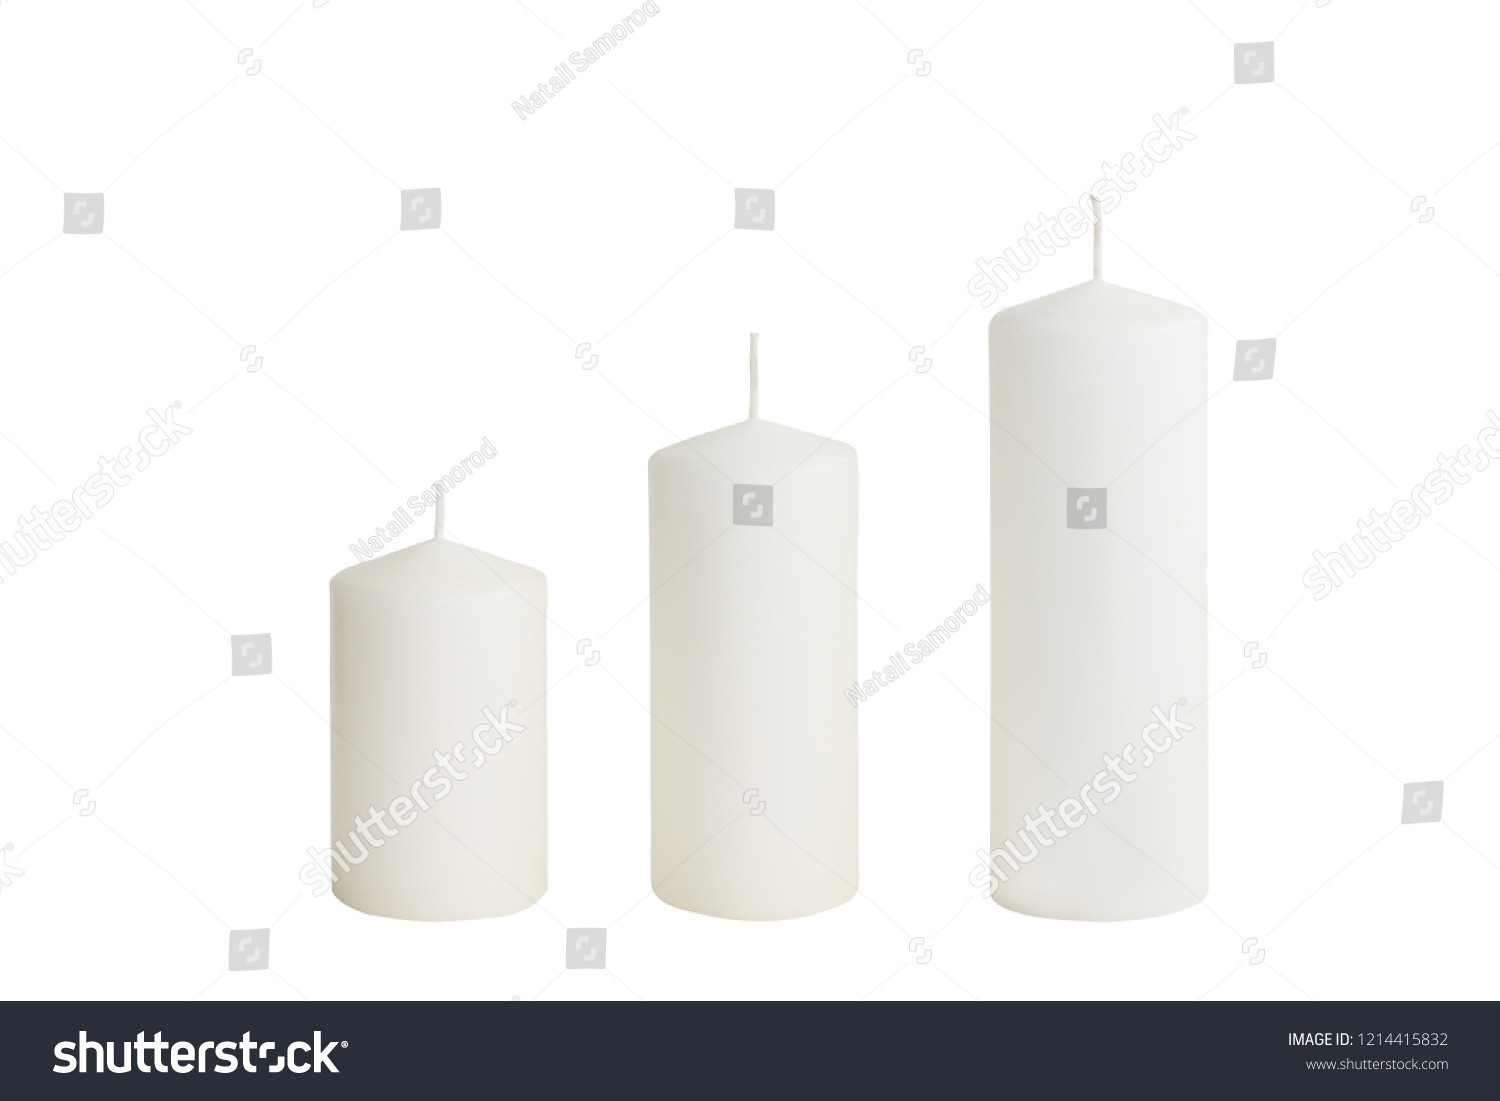 White candle on white background isolated. Set of wax candle. Christmas decor #1214415832